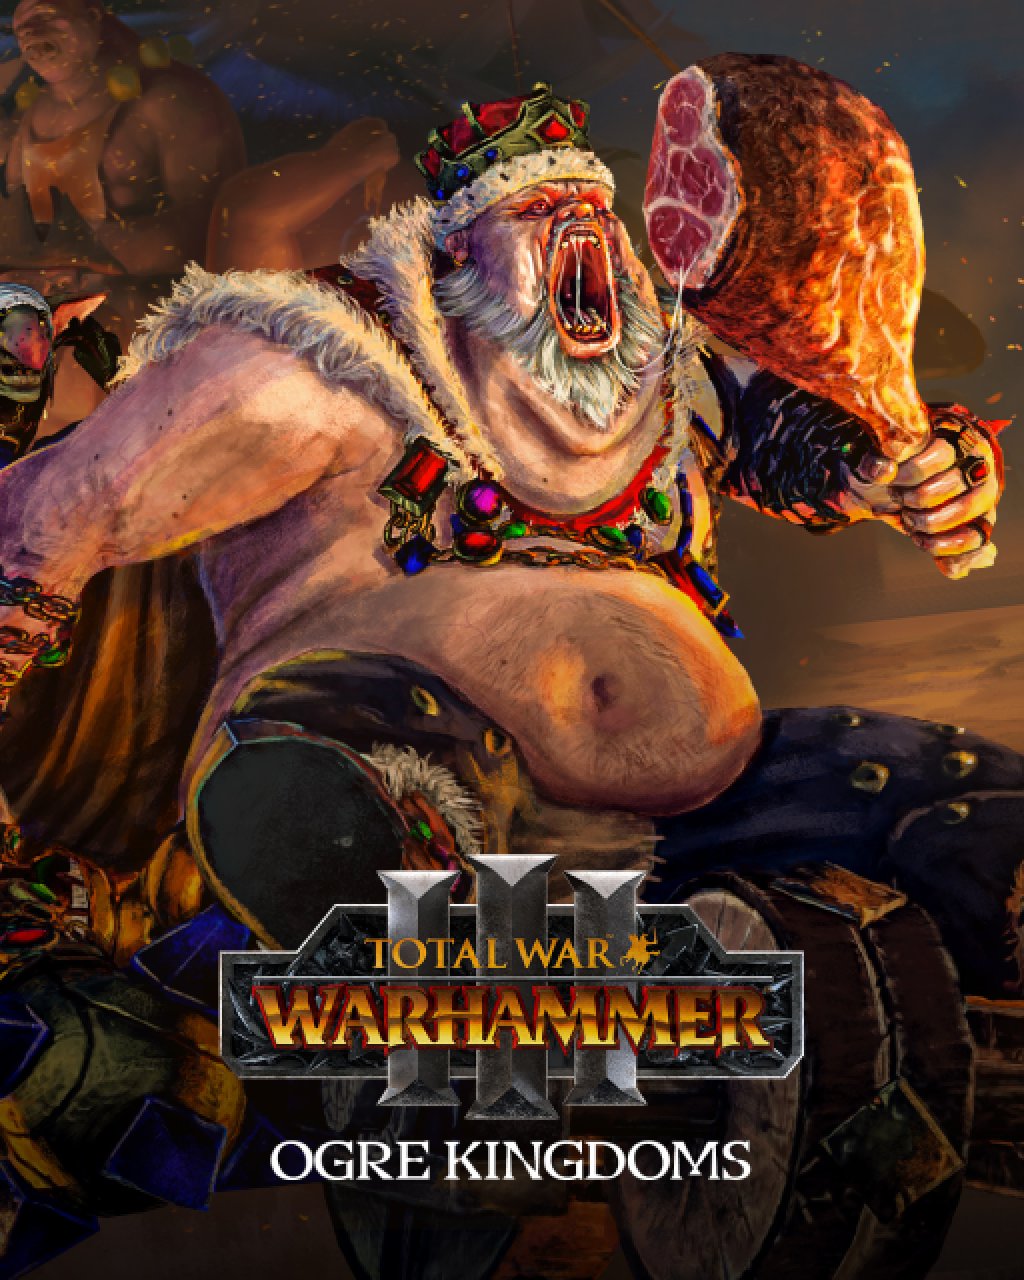 Obrázek ESD Total War Warhammer III Ogre Kingdoms